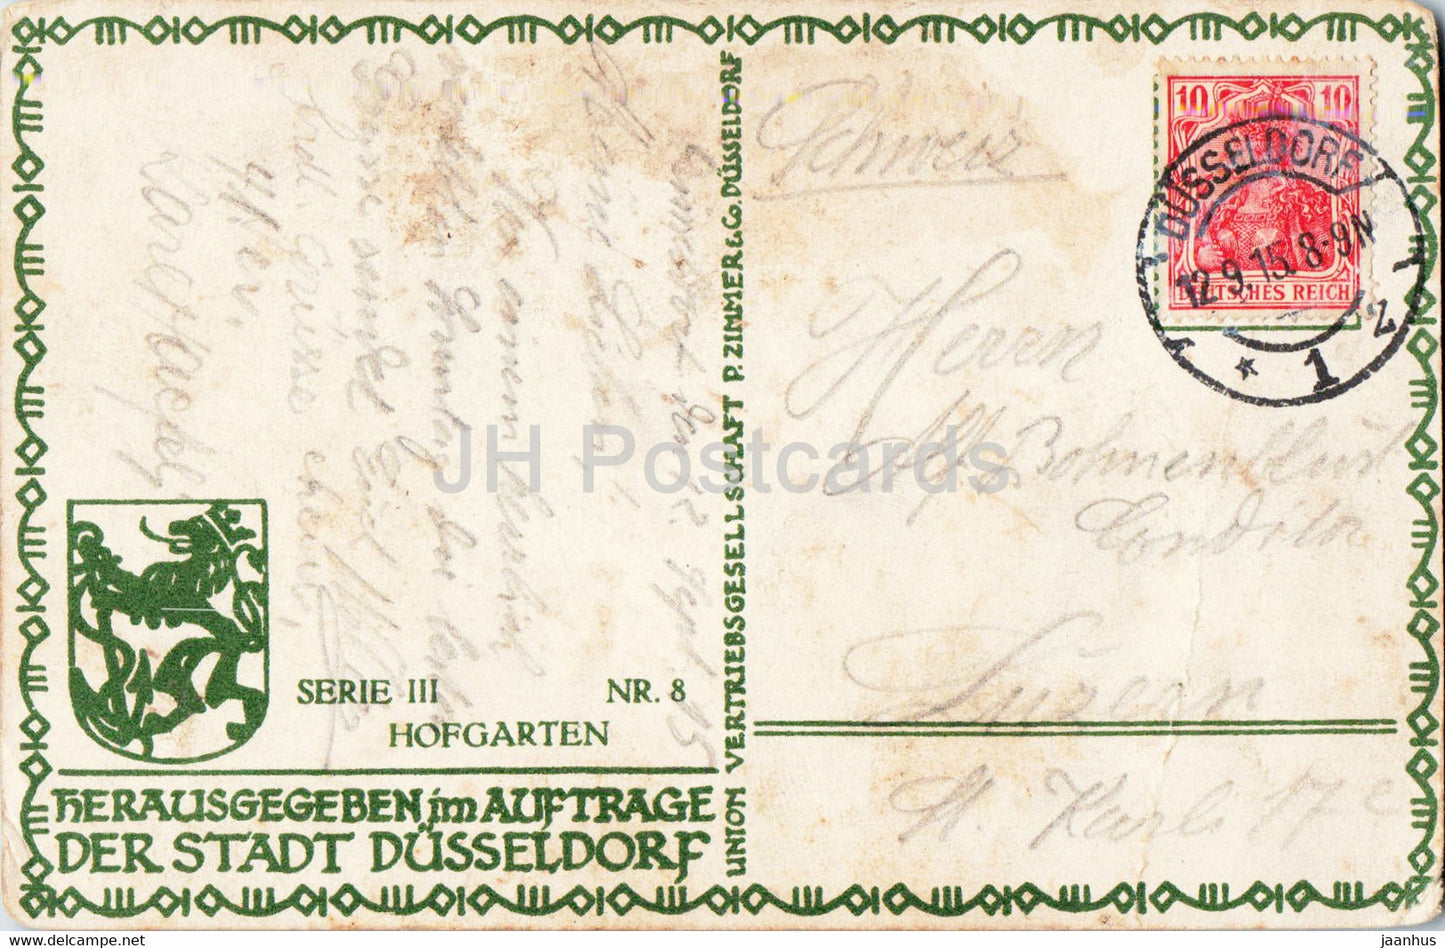 Düsseldorf - Hofgarten - carte postale ancienne - 1915 - Allemagne - utilisé